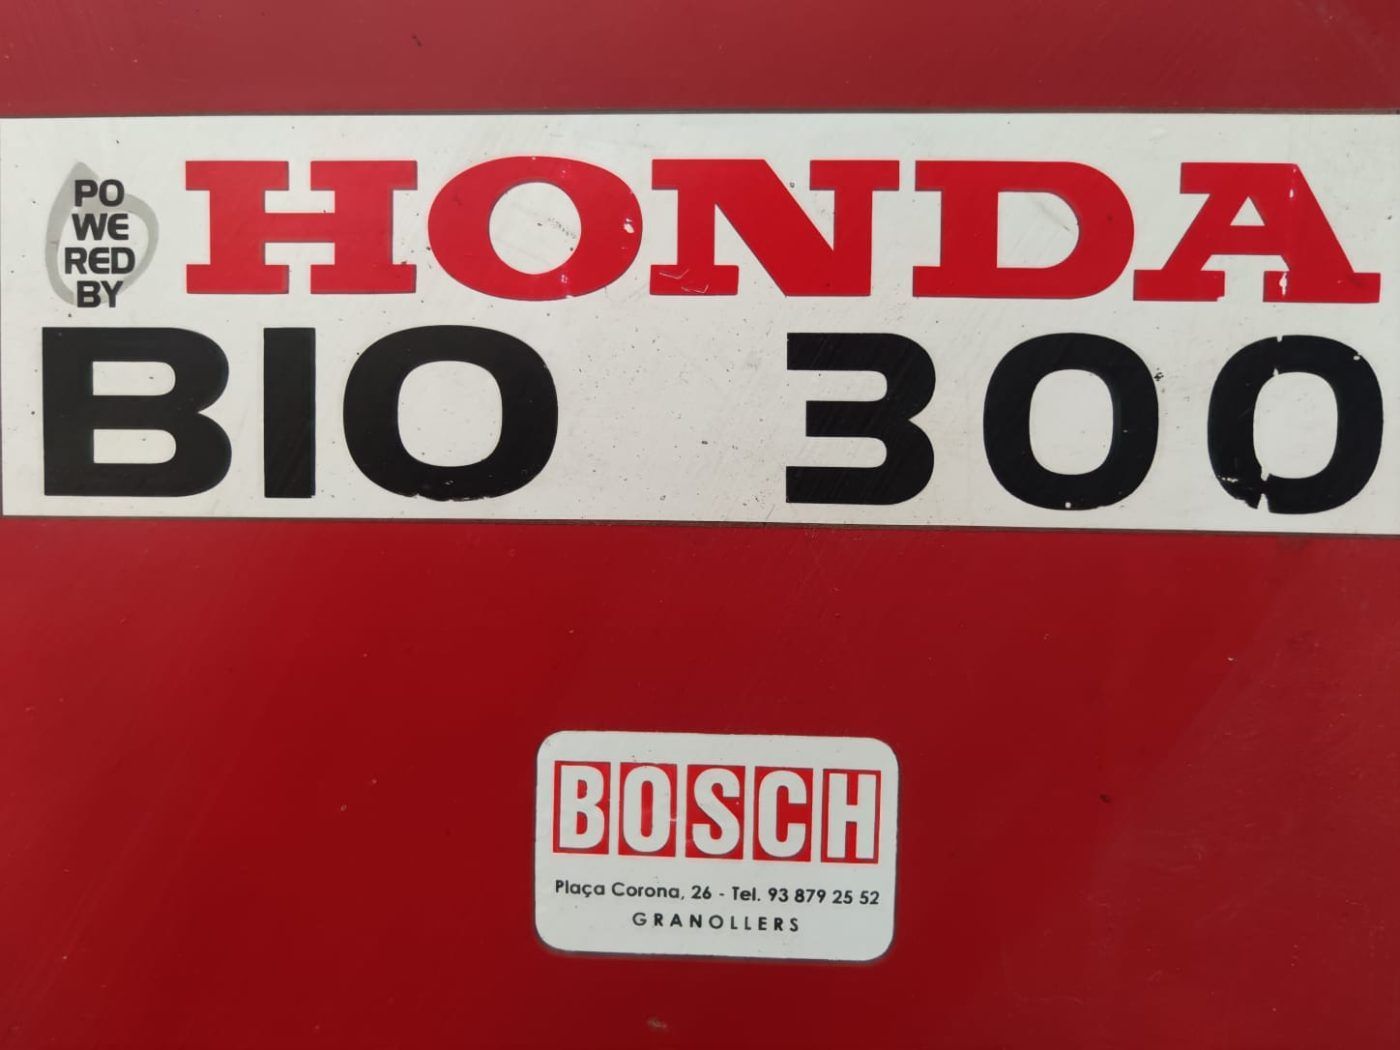 Honda BIO 3000 - Biotrituradora eléctrica usuario doméstico